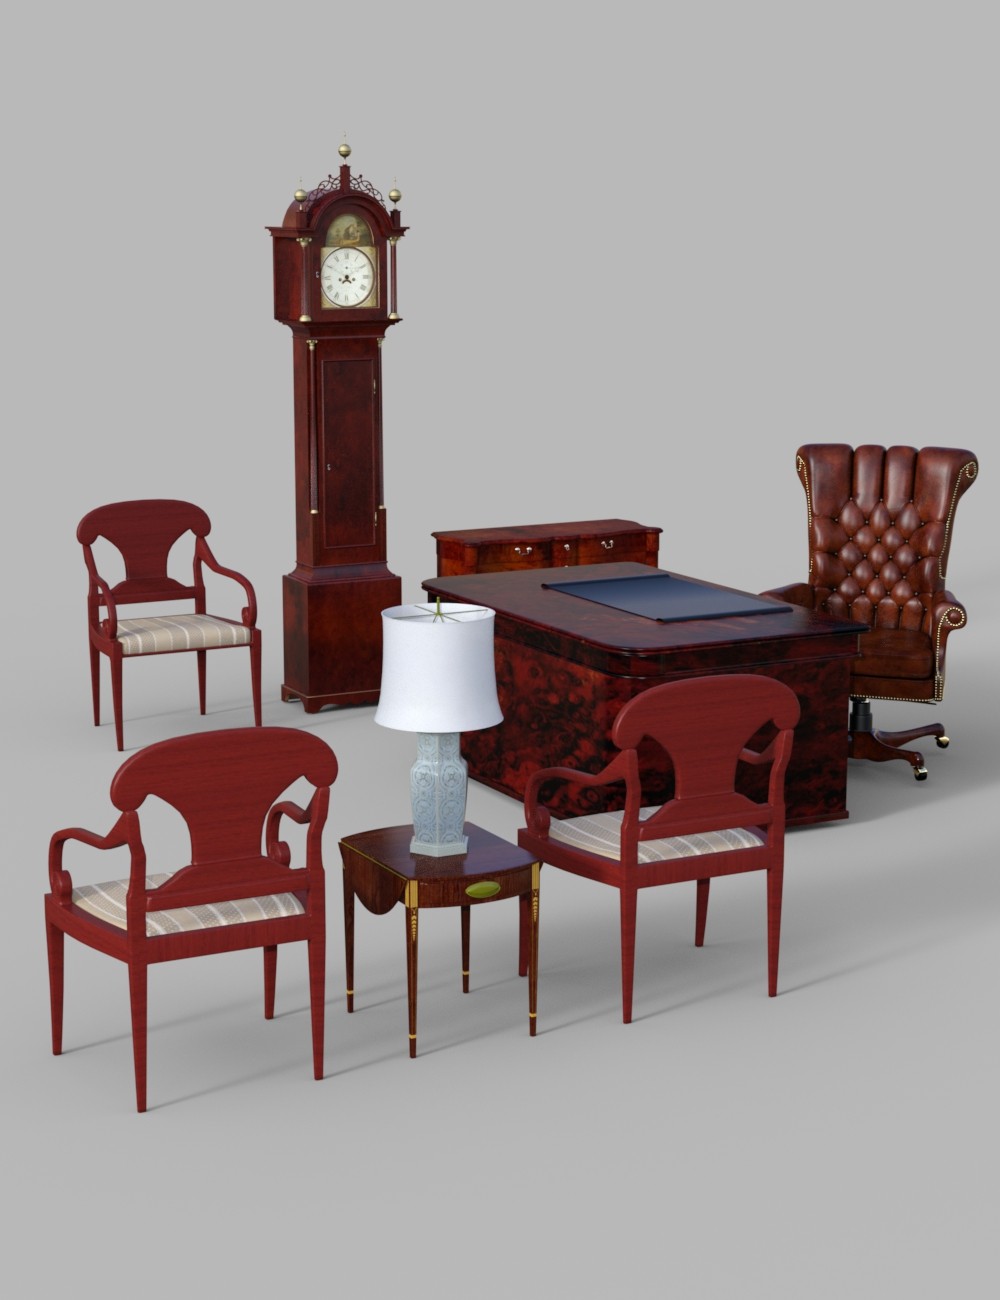 Download DAZ Studio 3 for FREE!: DAZ 3D  Furniture Set 1: Classic